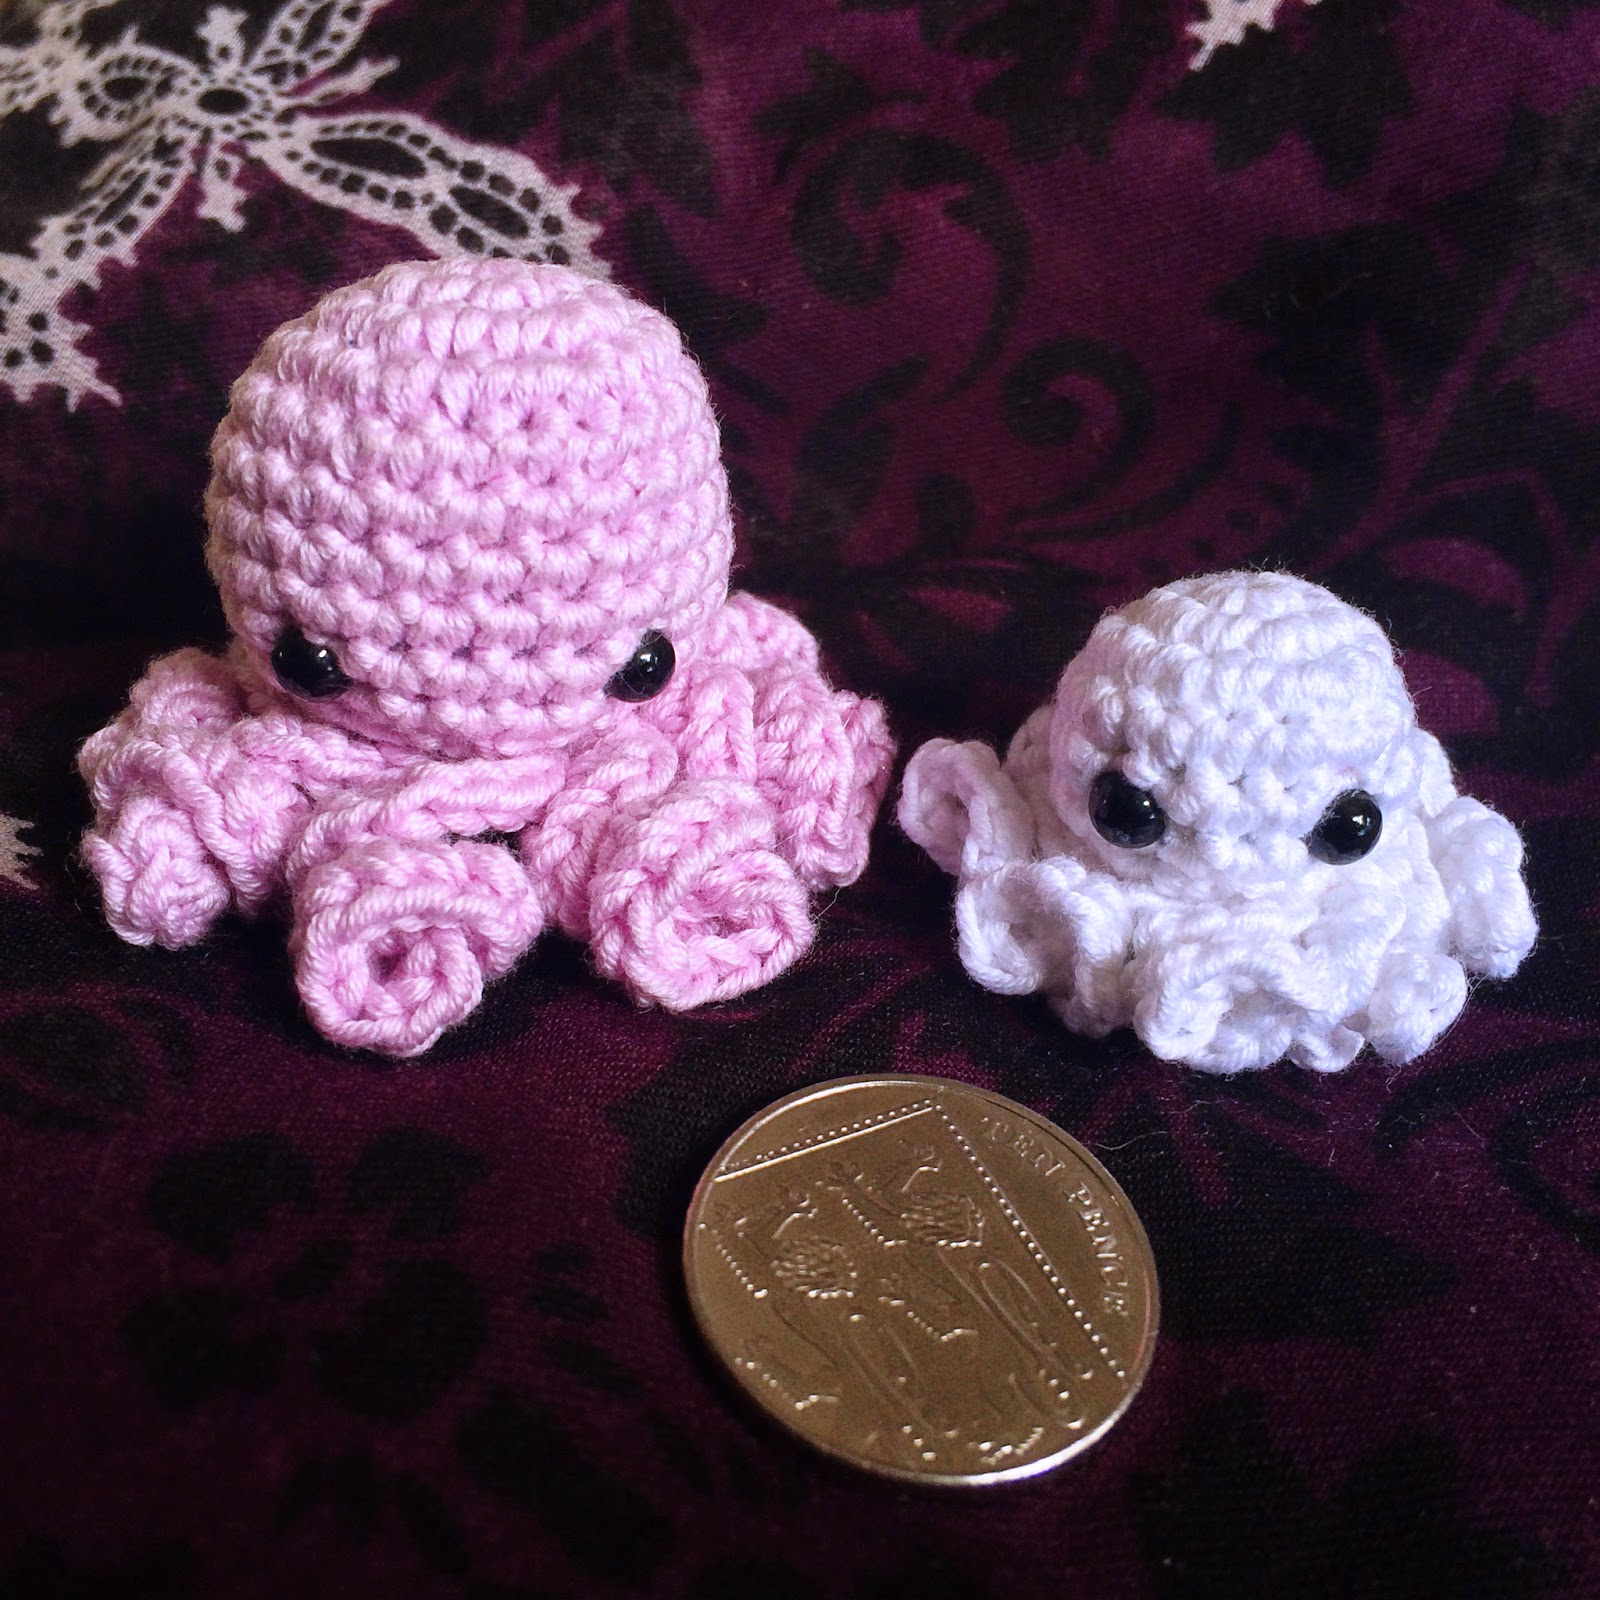 two tiny crochet ocotopus amigurumis with coin